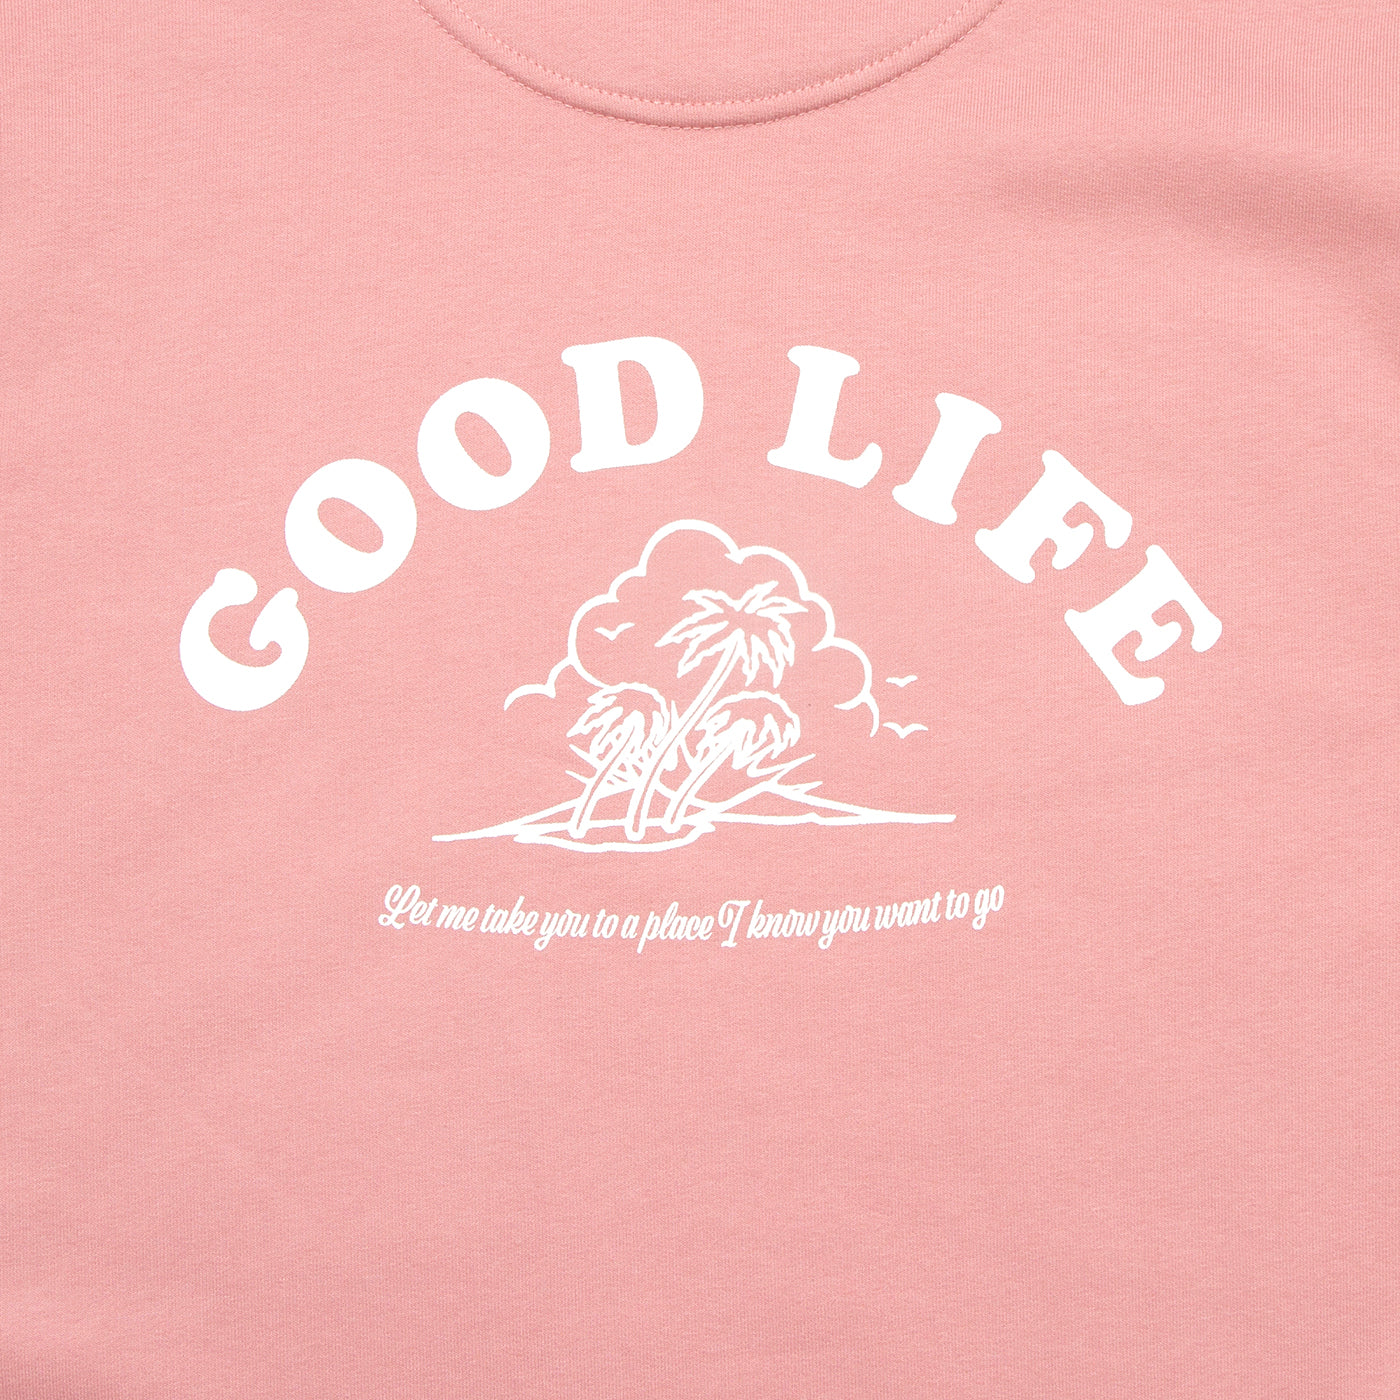 Good Life - Sweatshirt - Canyon Pink - Wasted Heroes